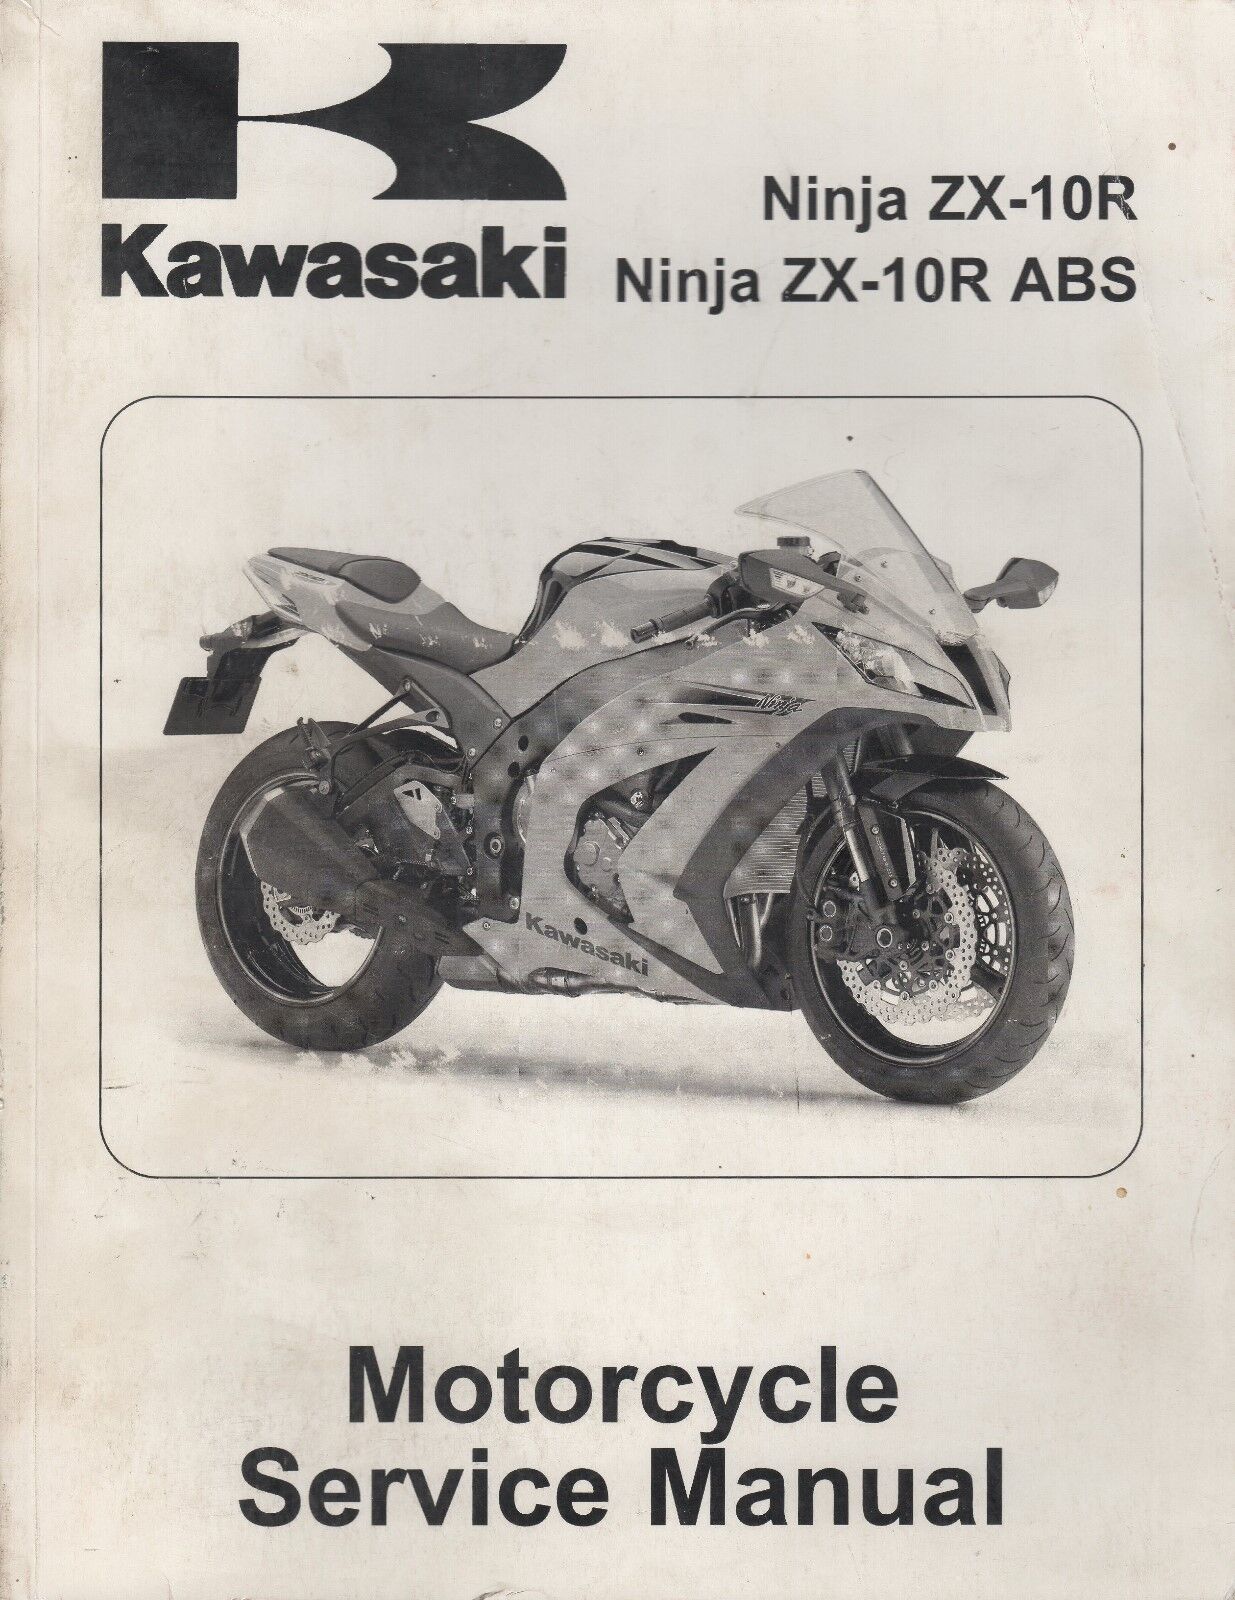 2011 KAWASAKI MOTORCYCLE NINJA ZX-10R ABS SERVICE MANUAL 99924 